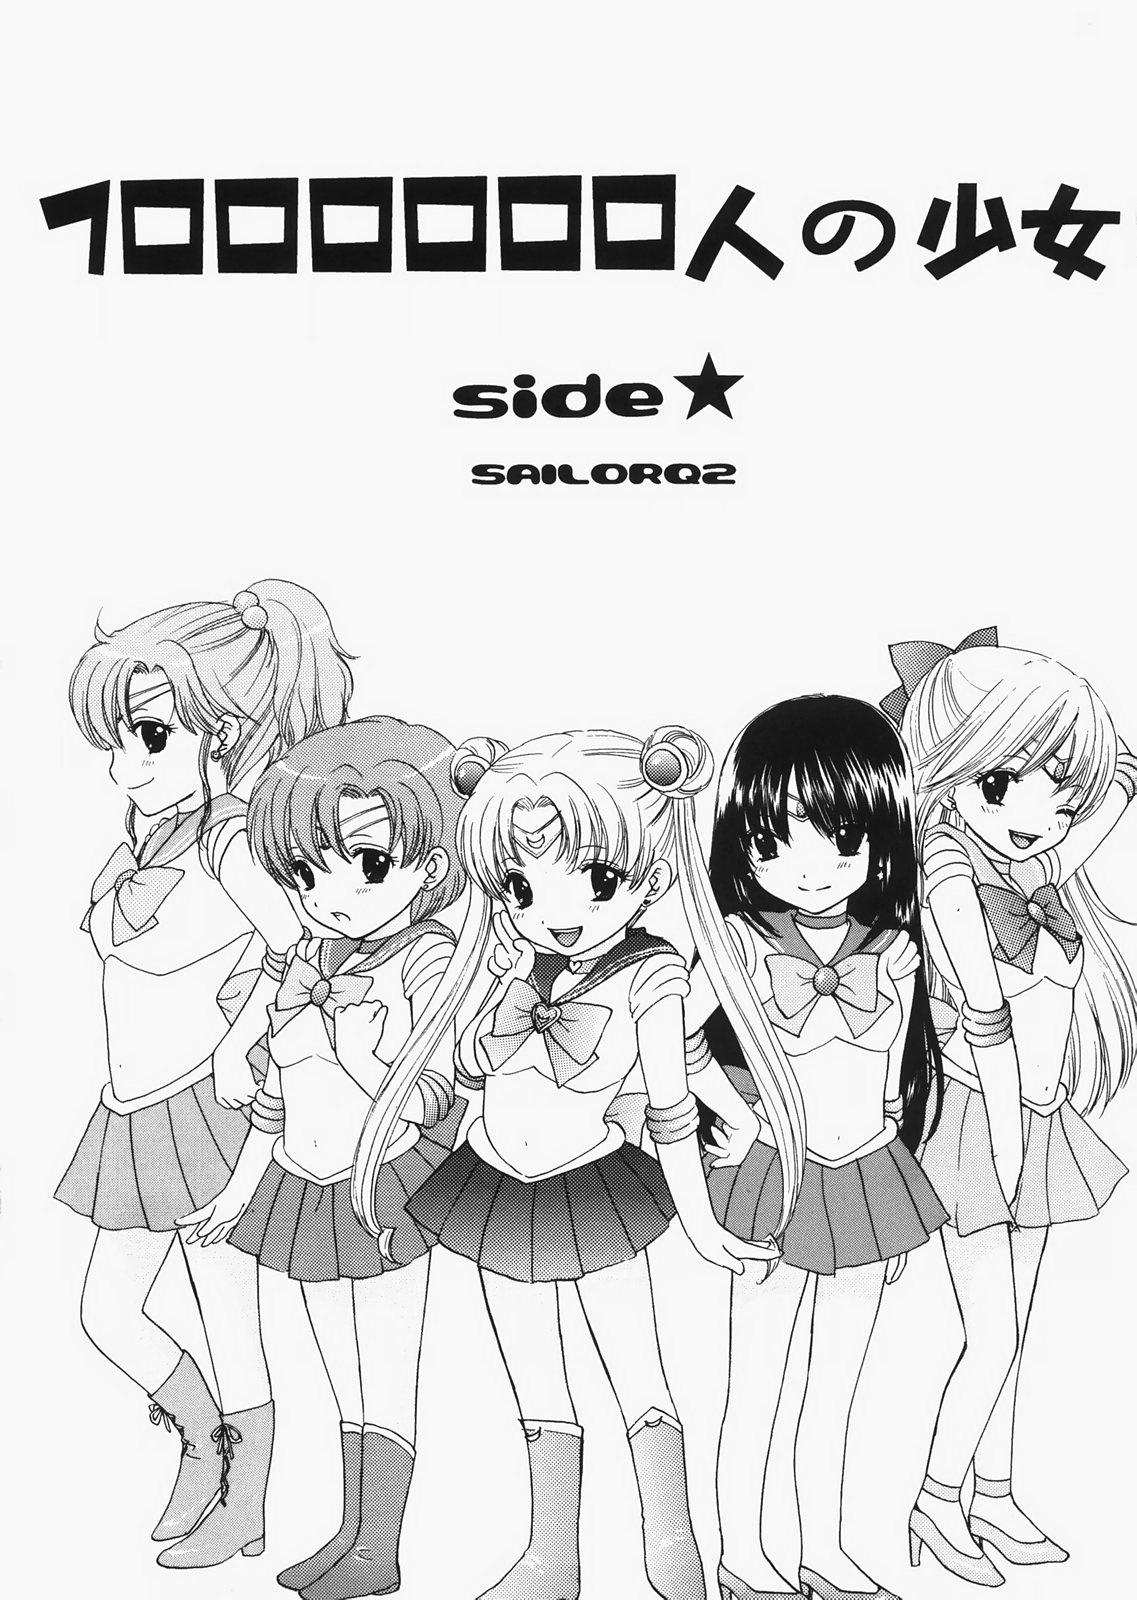 Threeway 1000000-nin no Shoujo side star - Sailor moon Gay Anal - Page 4